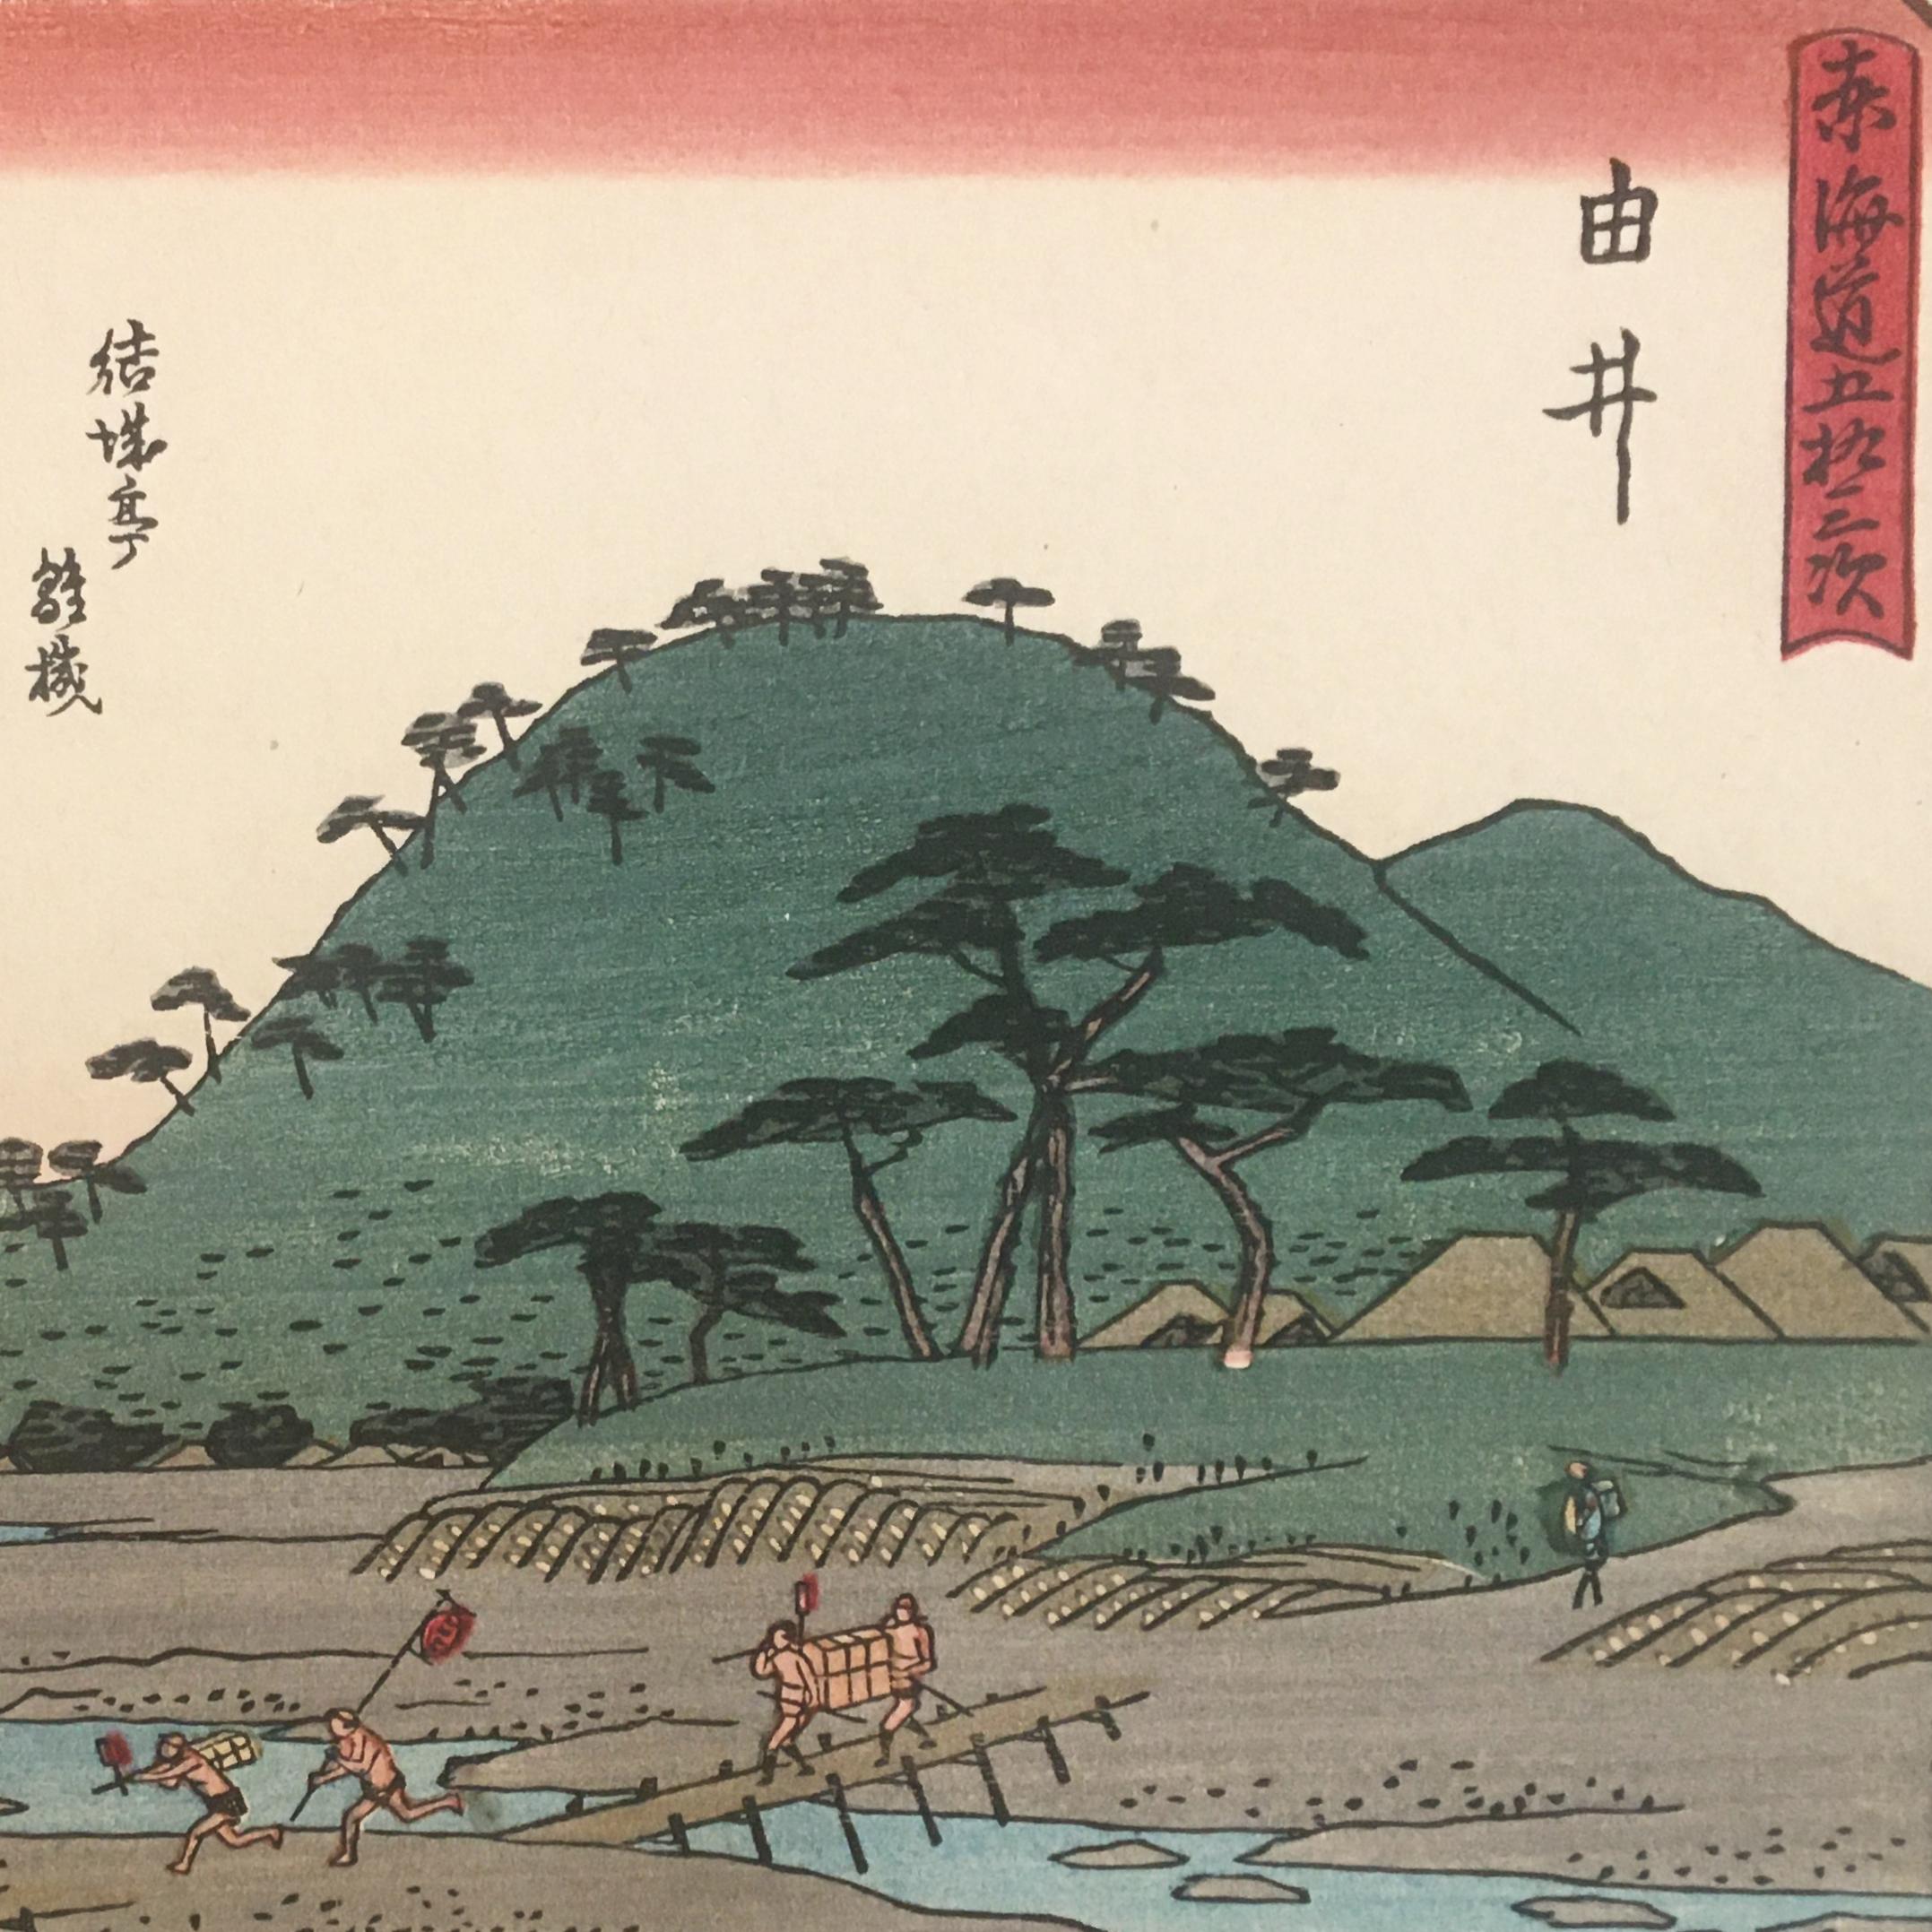 'View of Yui', After Utagawa Hiroshige, Ukiyo-E Woodblock, Tokaido, Edo - Print by Utagawa Hiroshige (Ando Hiroshige)